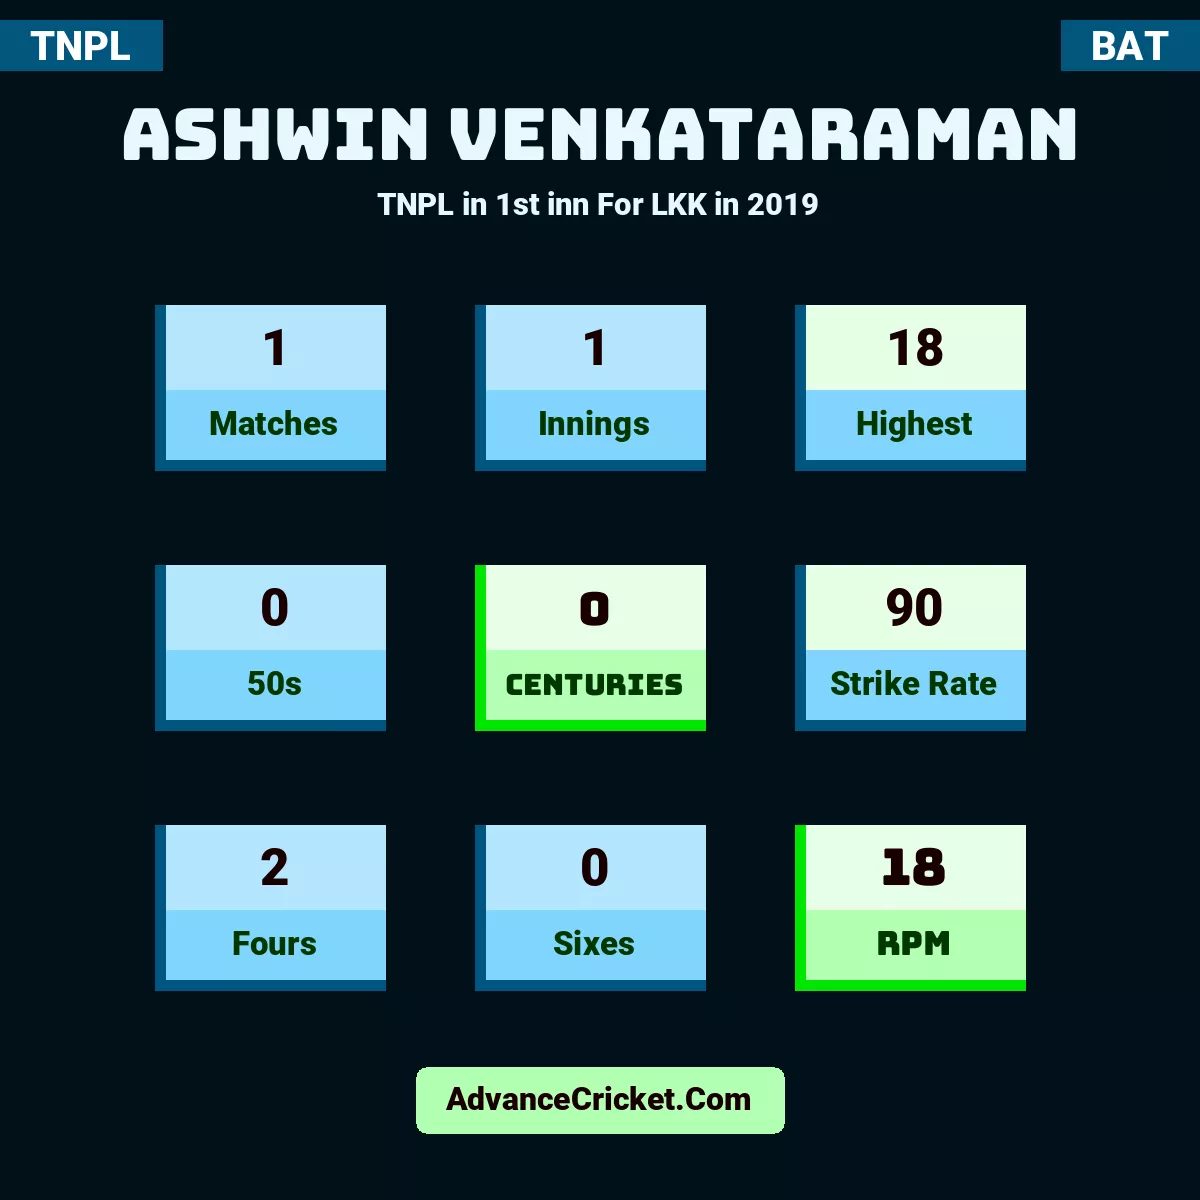 Ashwin Venkataraman TNPL  in 1st inn For LKK in 2019, Ashwin Venkataraman played 1 matches, scored 18 runs as highest, 0 half-centuries, and 0 centuries, with a strike rate of 90. A.Venkataraman hit 2 fours and 0 sixes, with an RPM of 18.